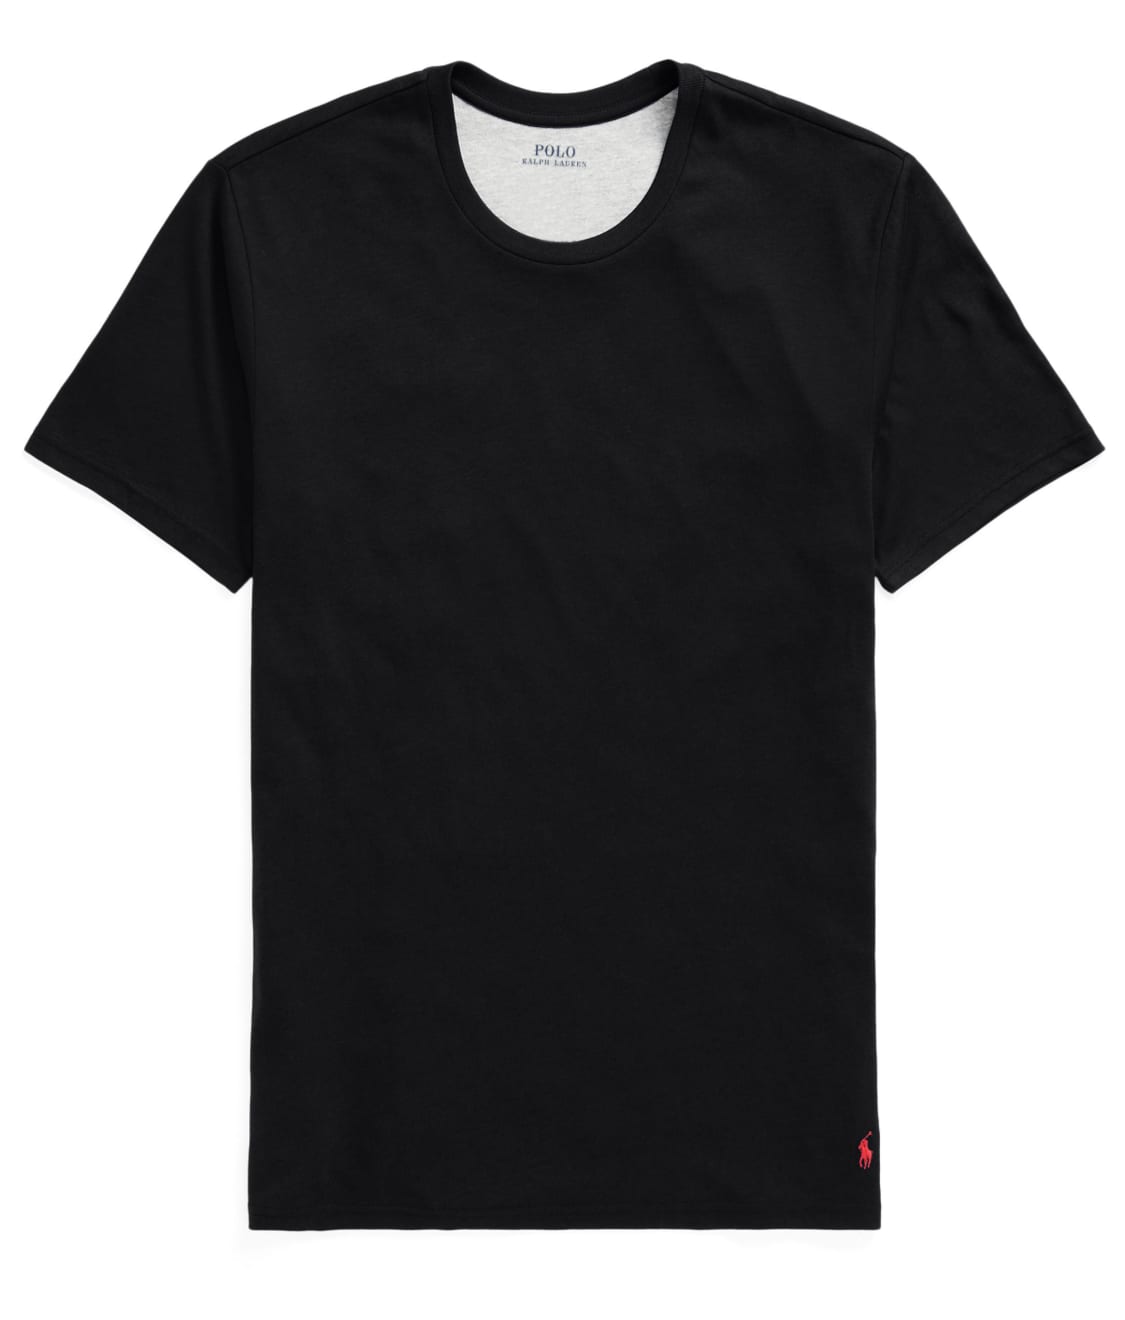 Polo Ralph Lauren: Supreme Comfort Crew Neck T-Shirt P051RL